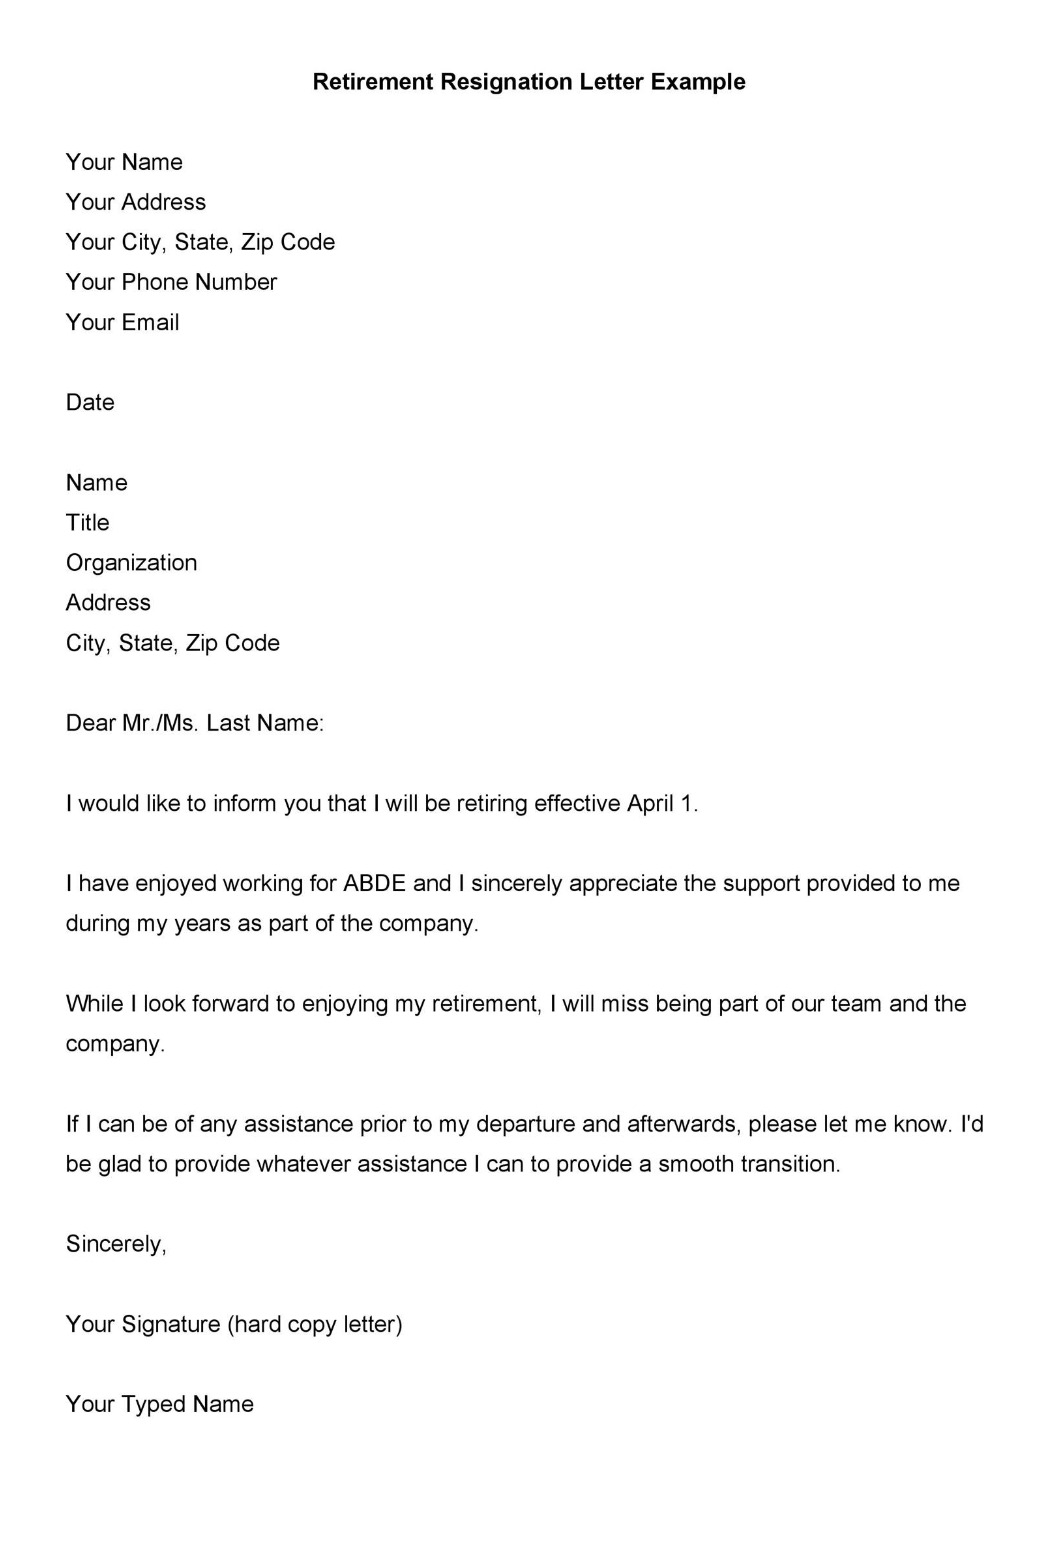 sample retirement resignation announcement letter